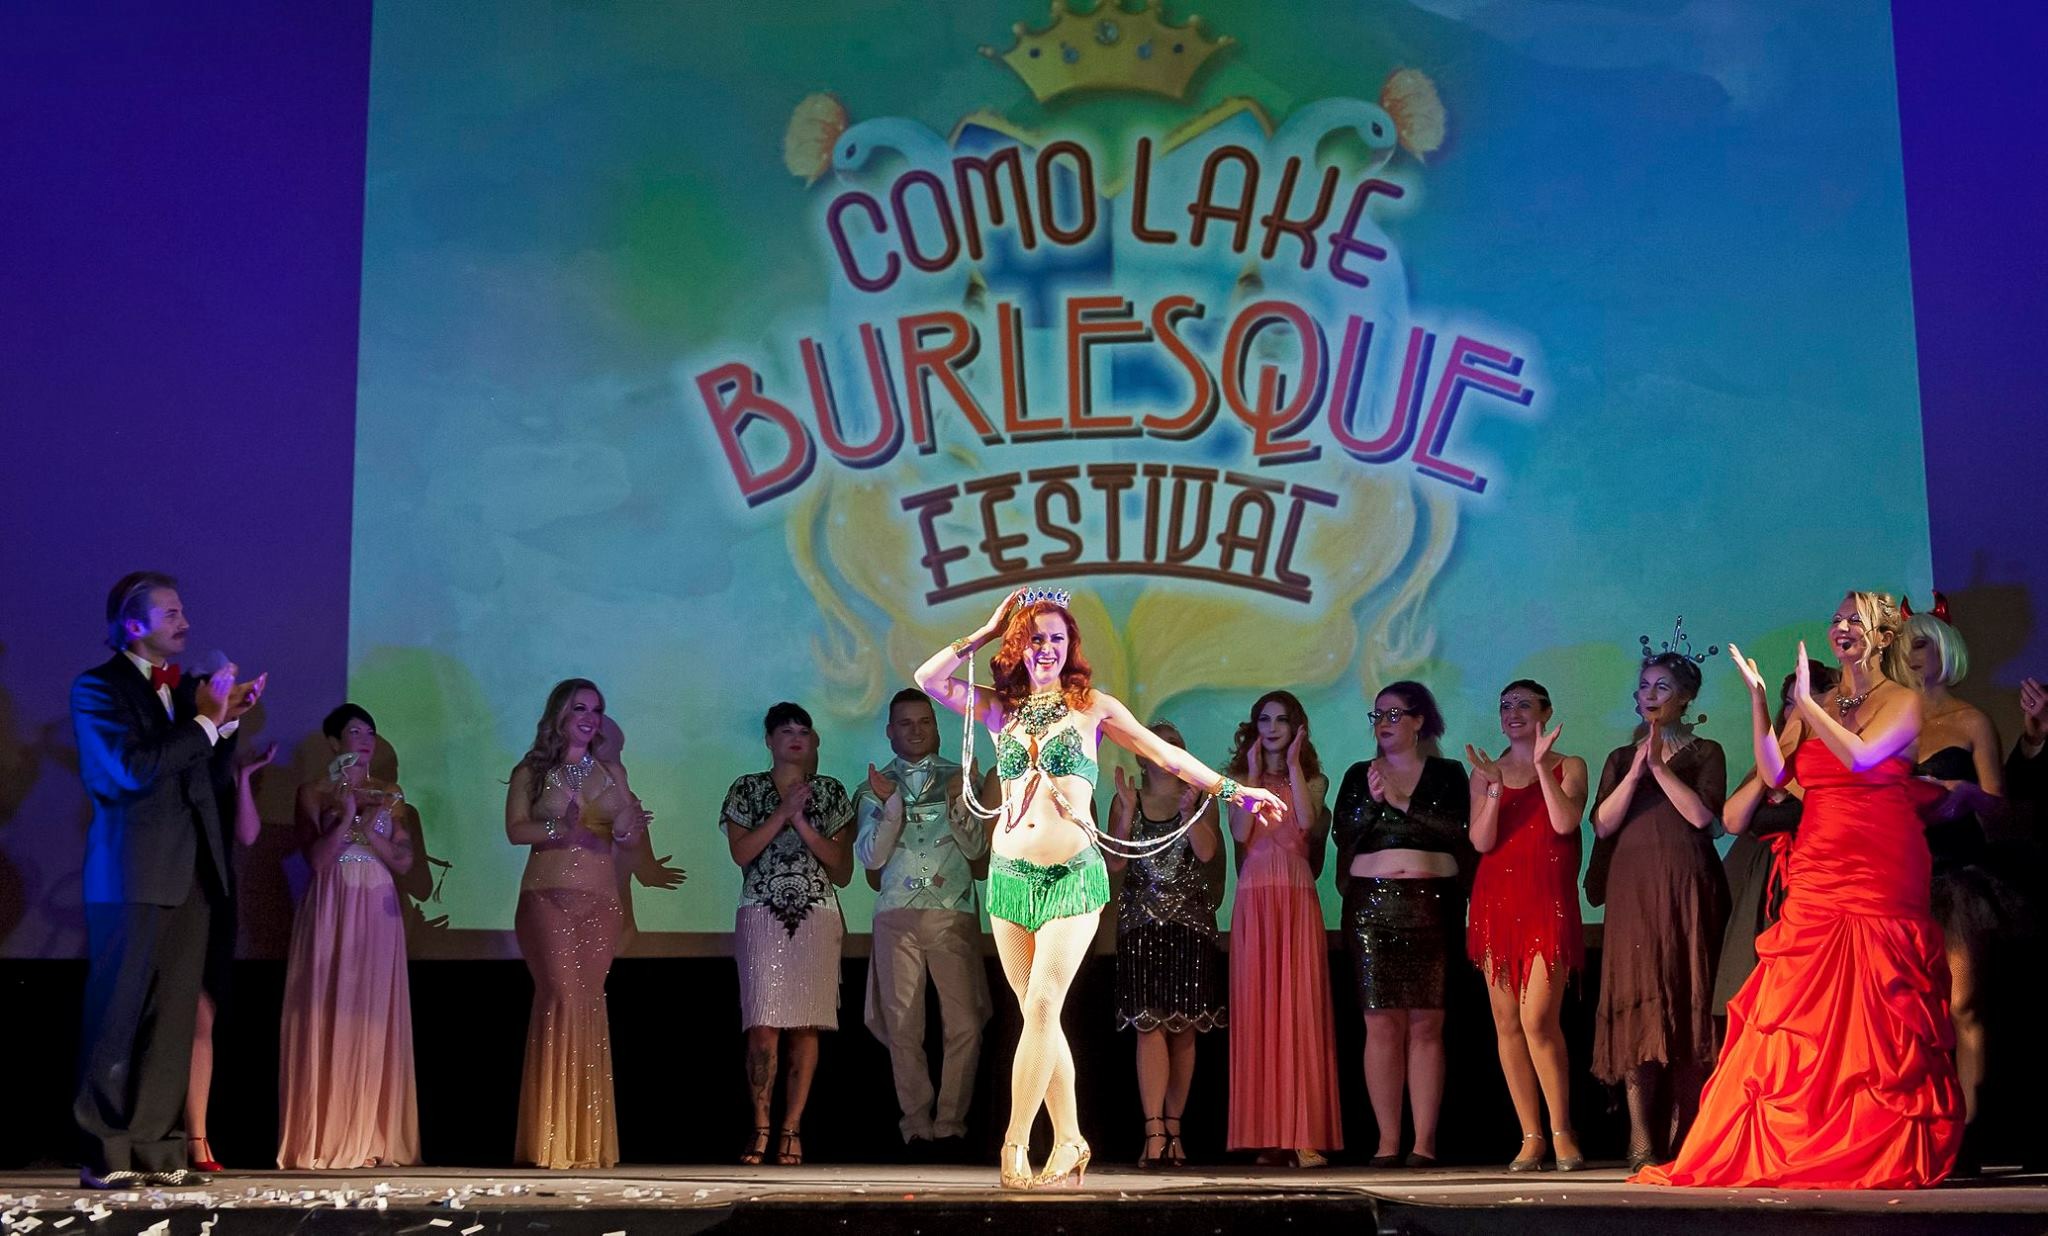  Francine winning the crown at Como Lake Burlesque Festival, Como Lake, Italy 